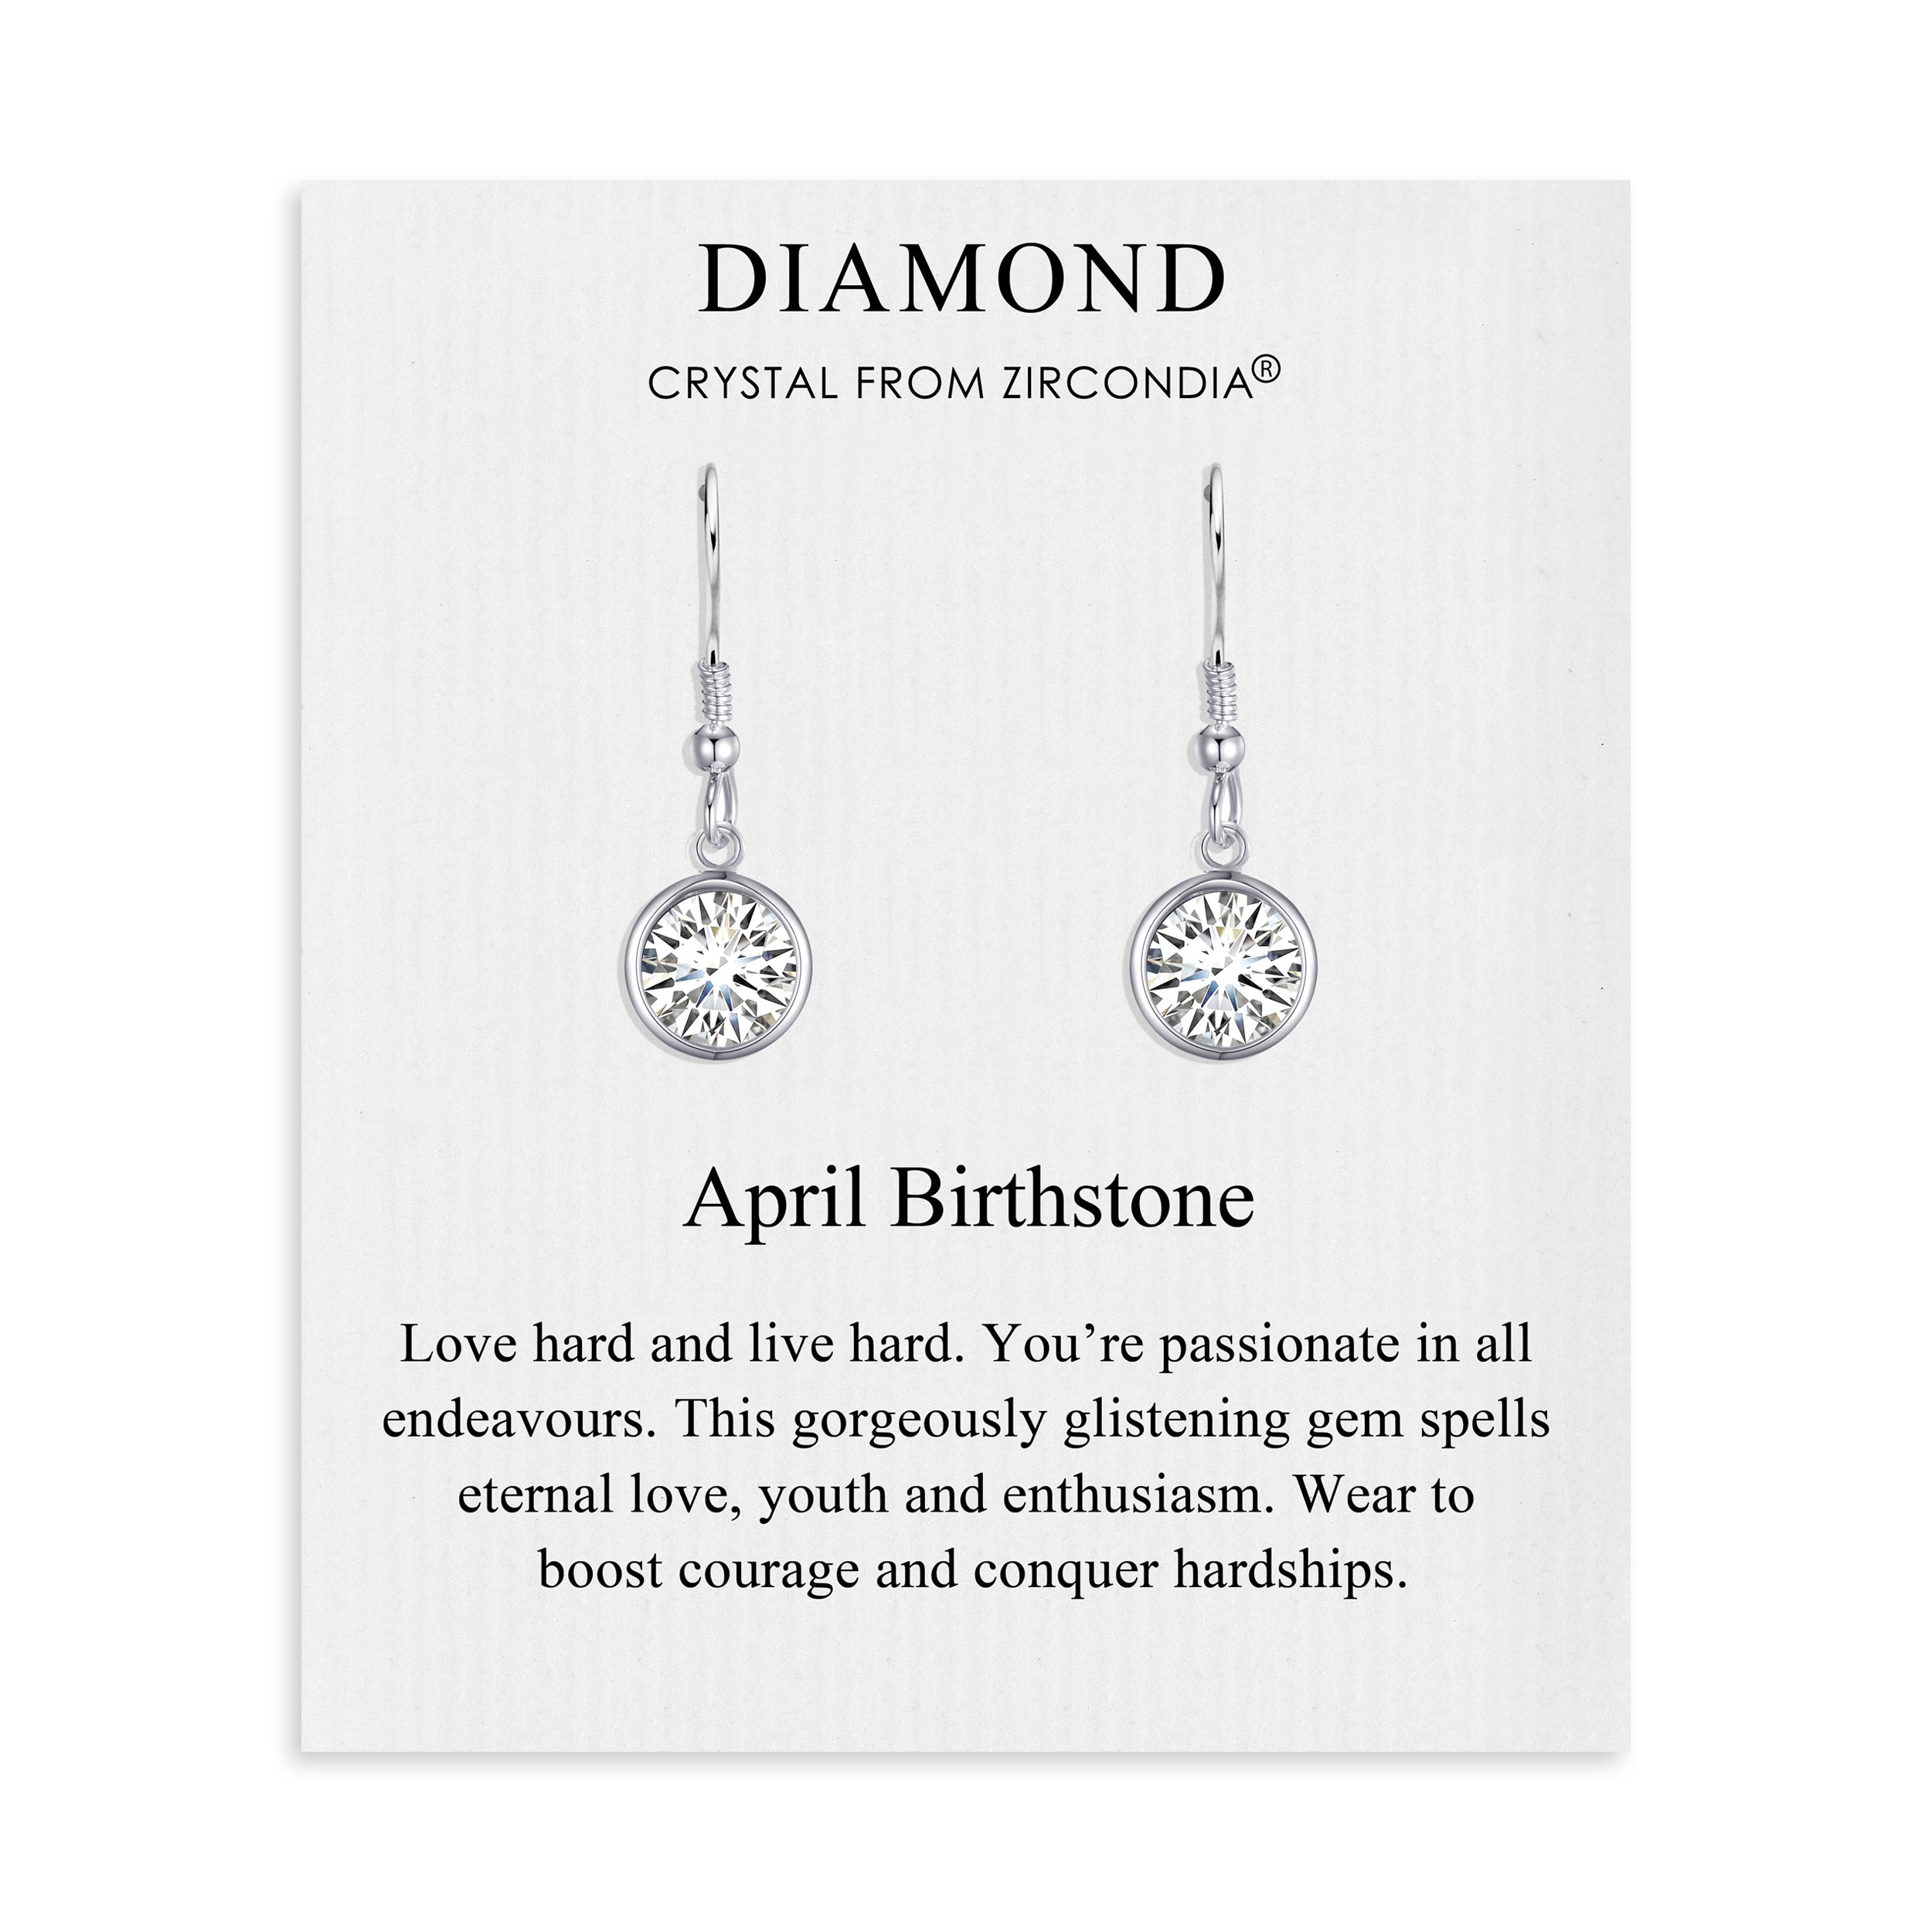 April Birthstone Drop Earrings Created with Diamond Zircondia® Crystals by Philip Jones Jewellery